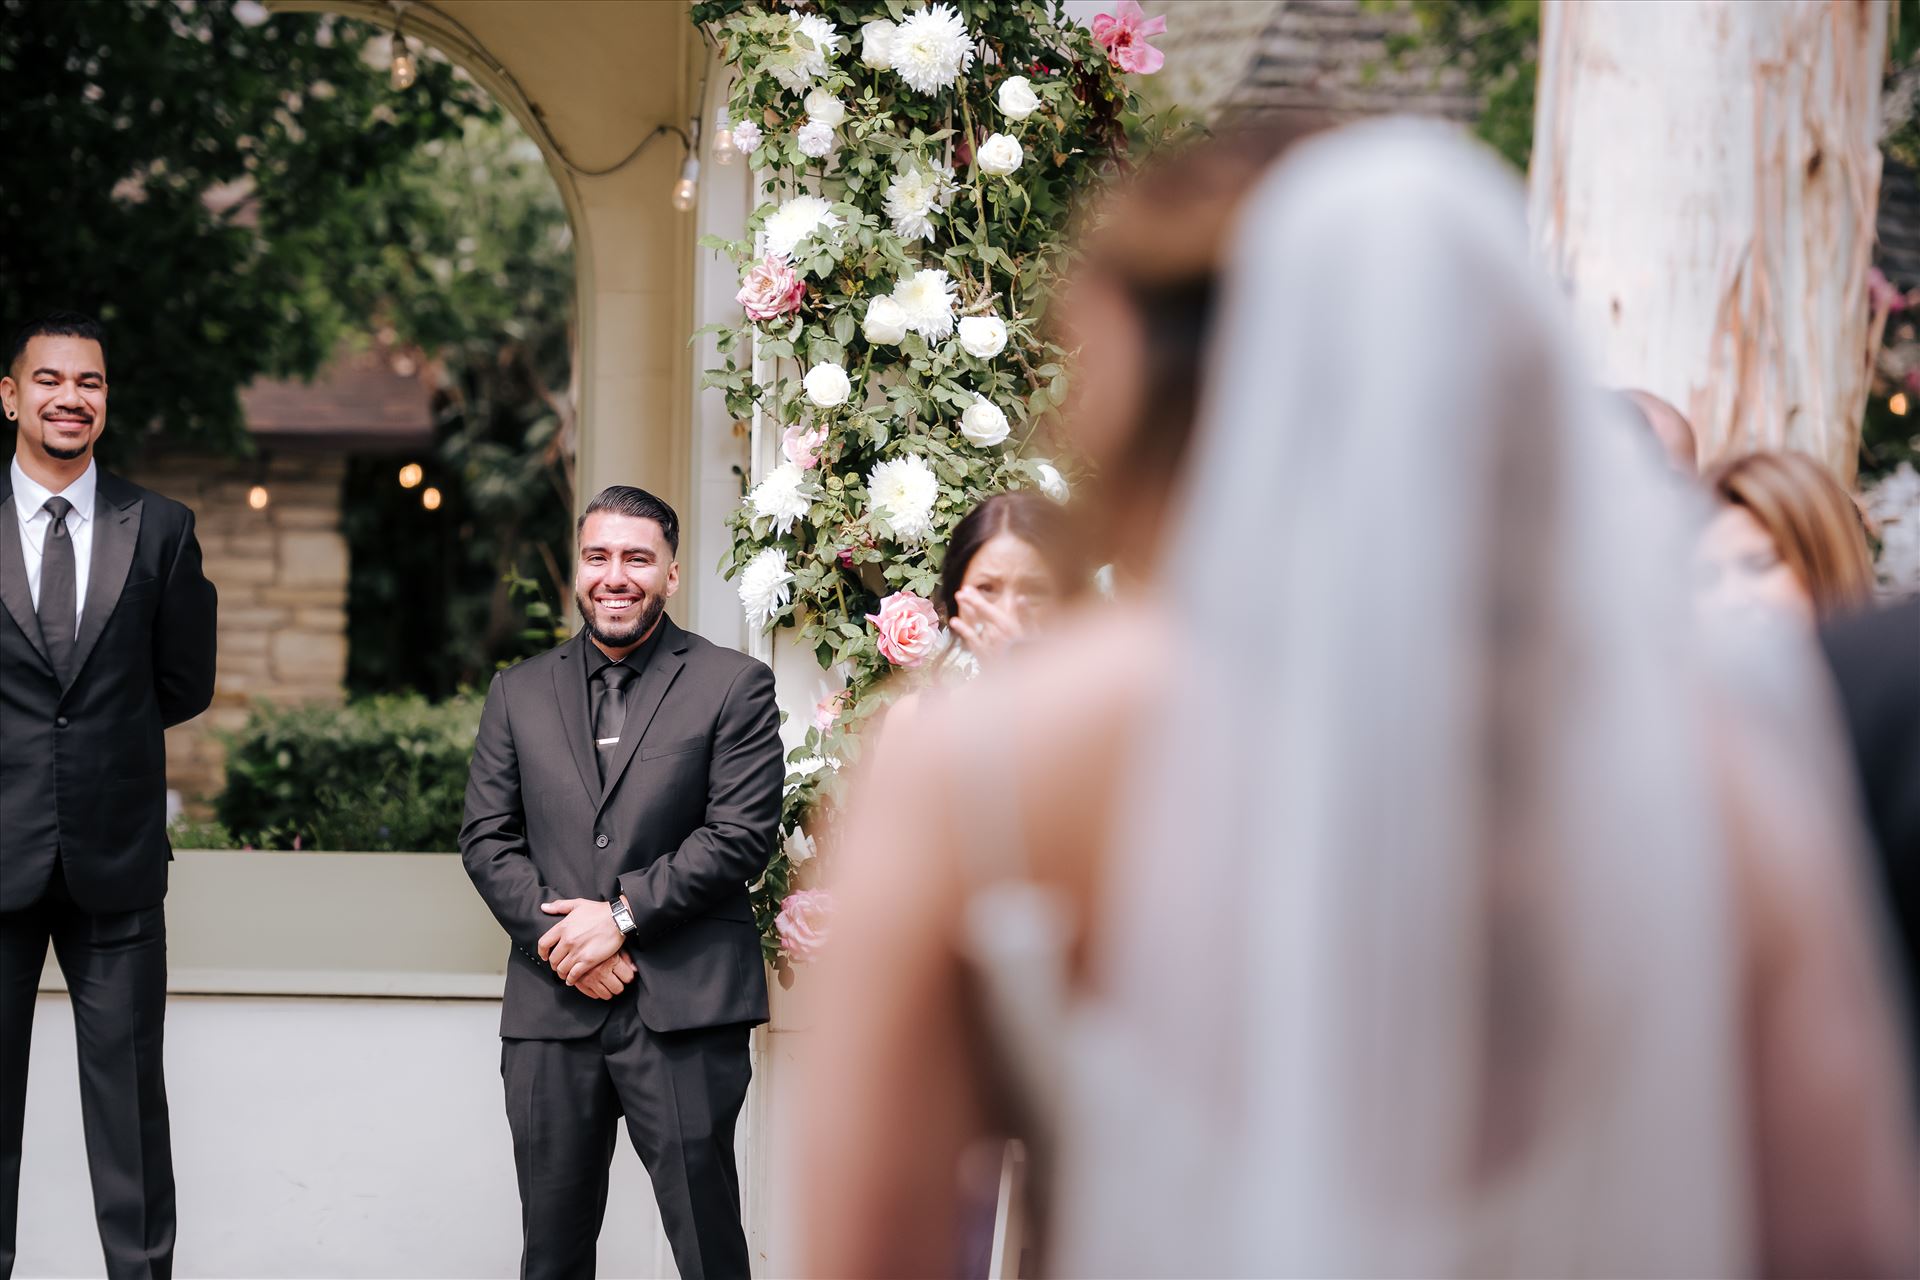 Final-2907.JPG Mirror's Edge Photography San Luis Obispo and Santa Barbara County Wedding Photographer. Kaleidoscope Inn and Gardens Wedding. Groom's first look at bride by Sarah Williams